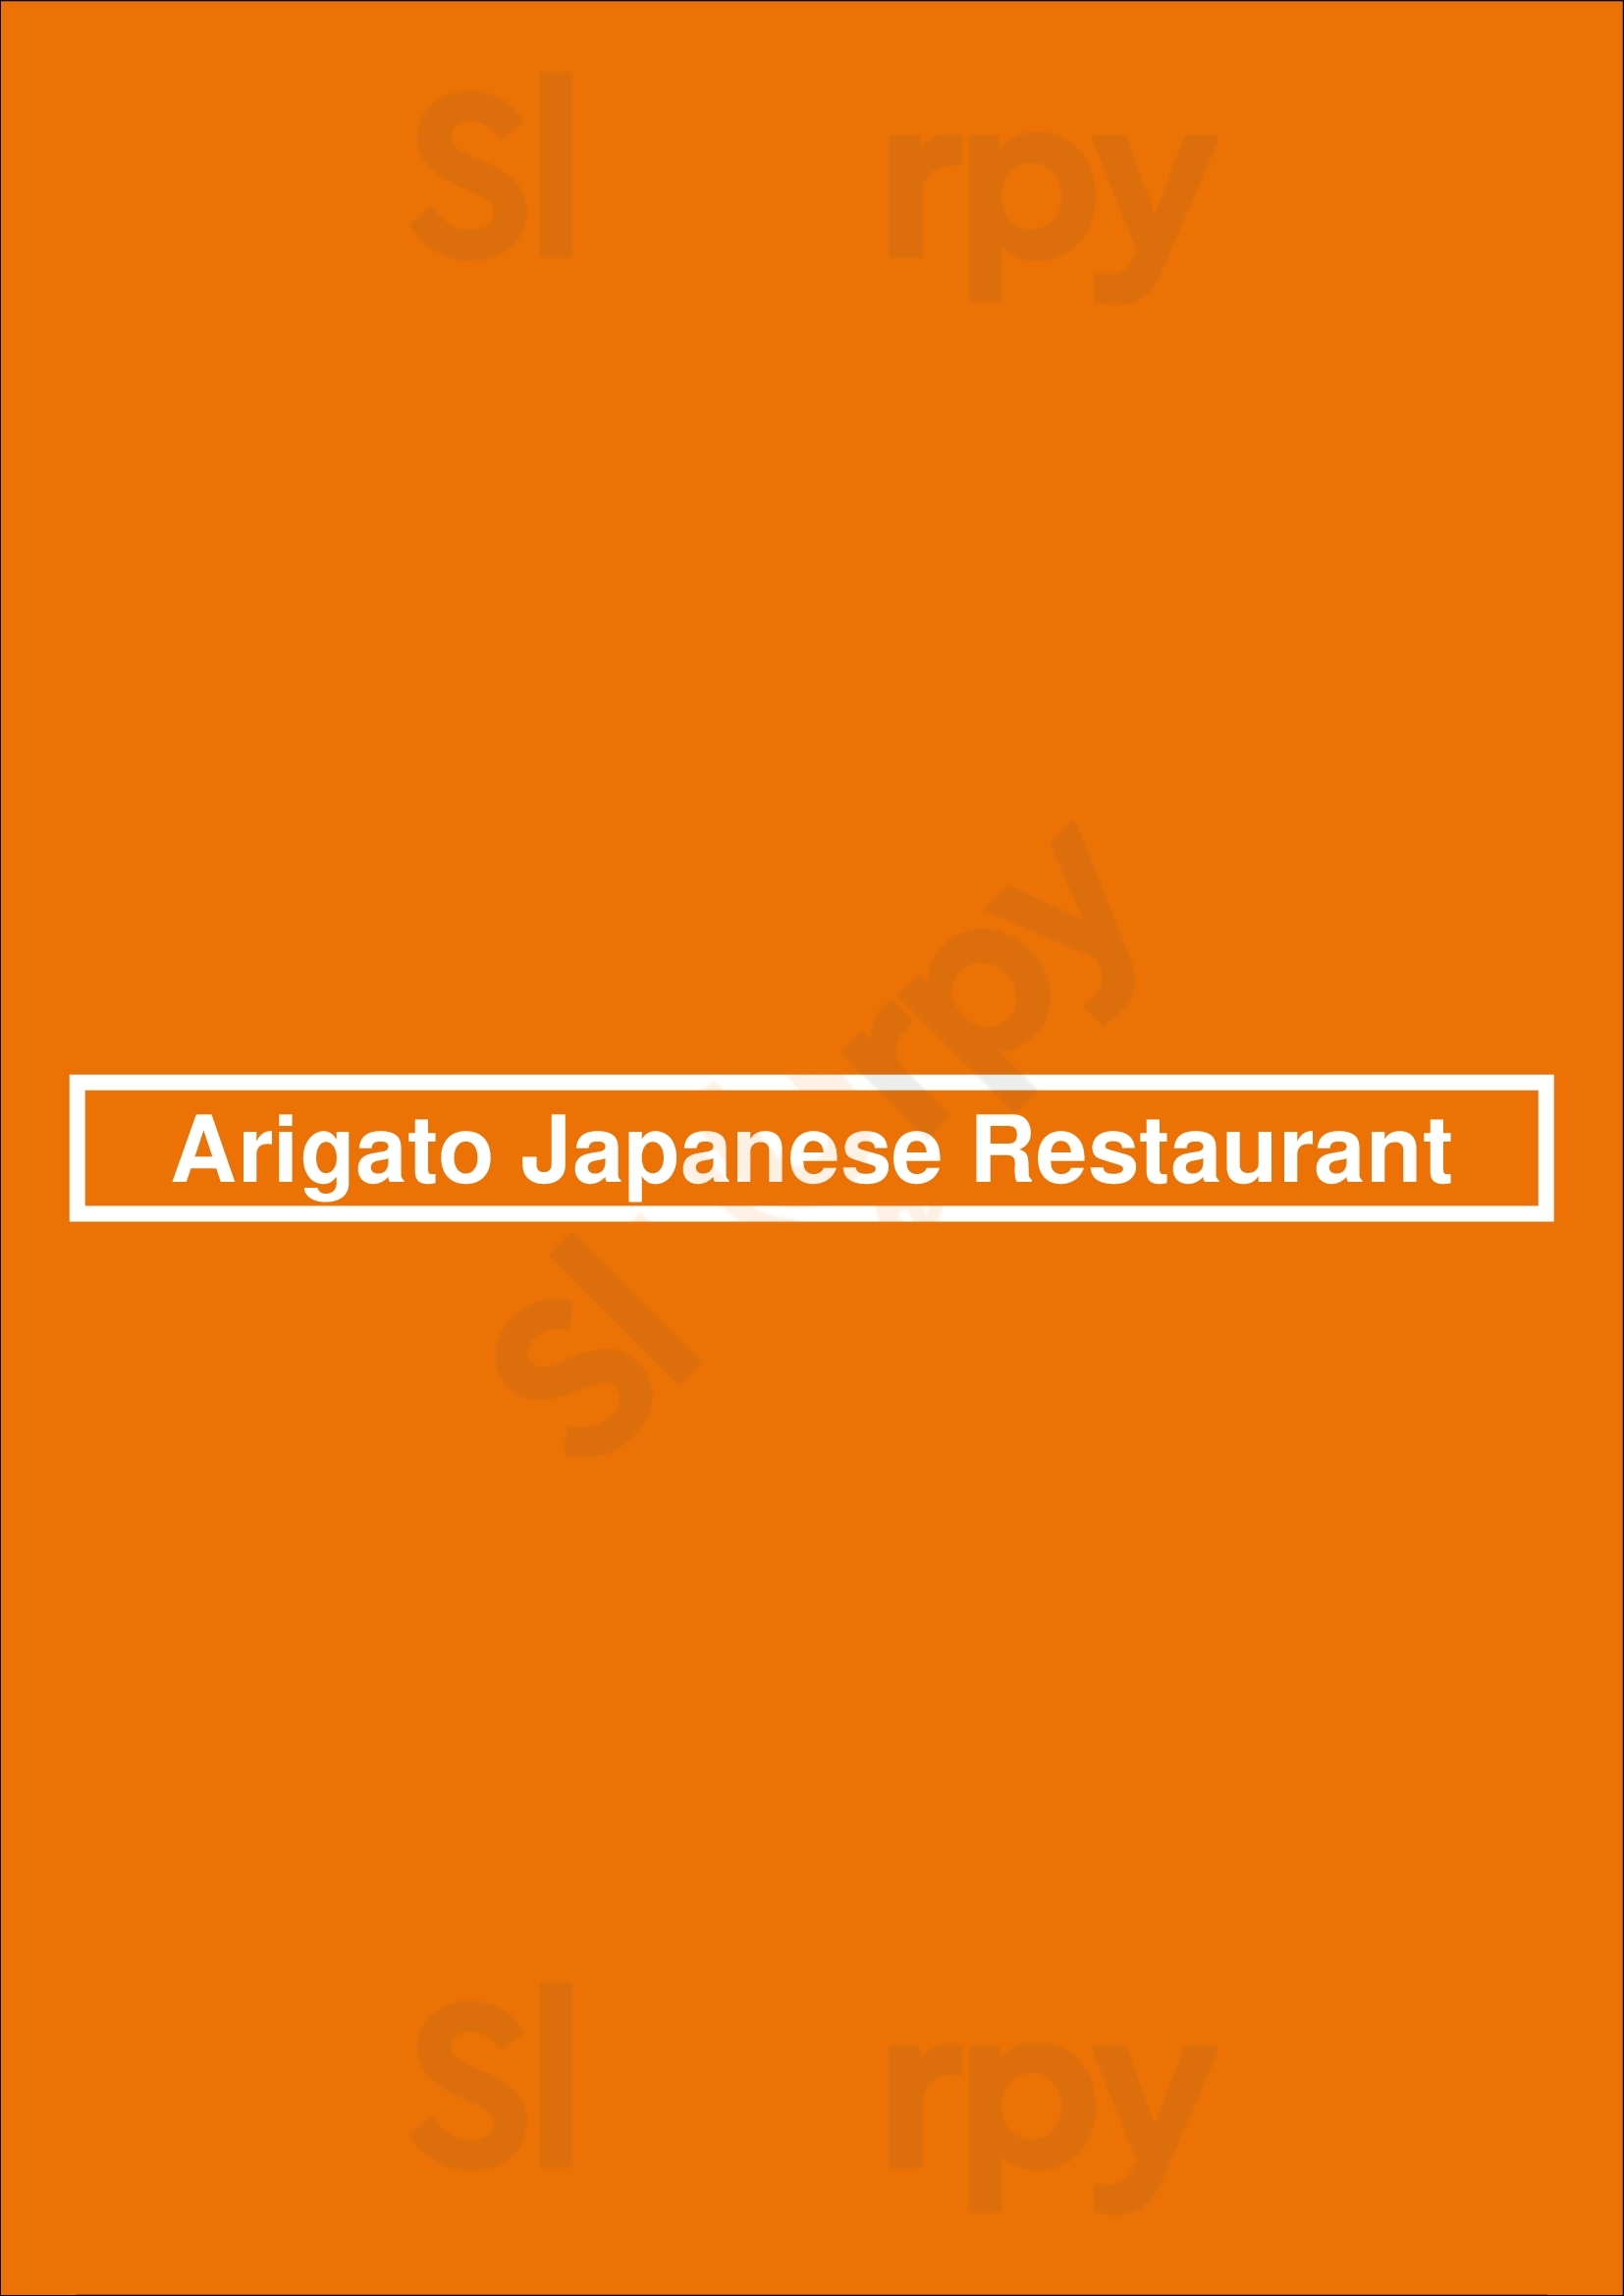 Arigato Japanese Restaurant La Mesa Menu - 1